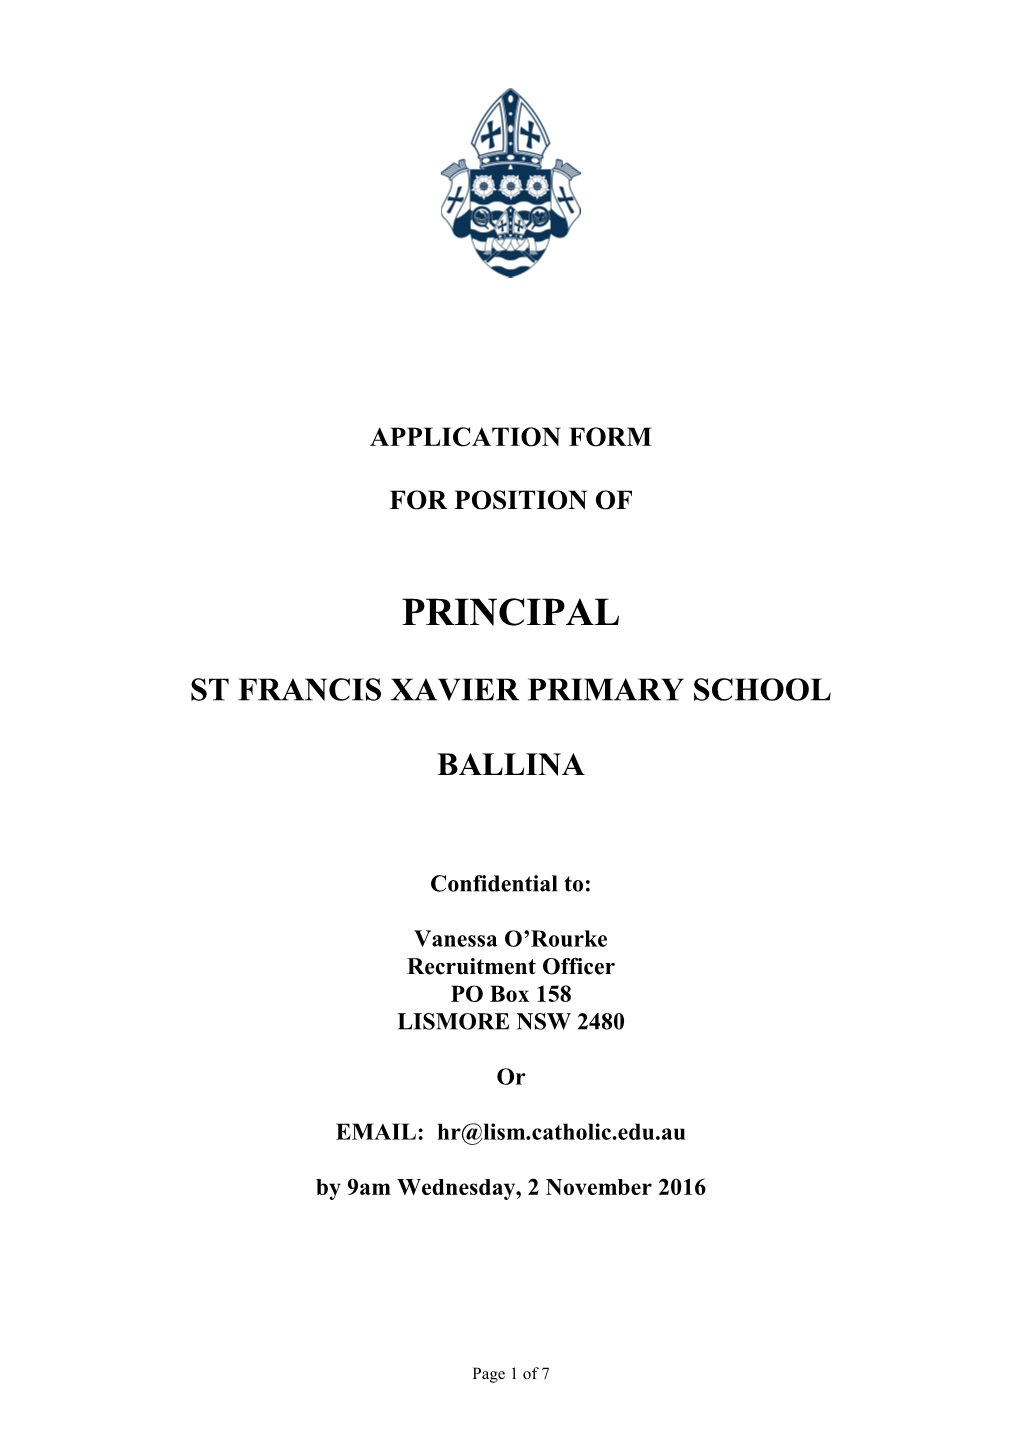 St Francis Xavier Primary School